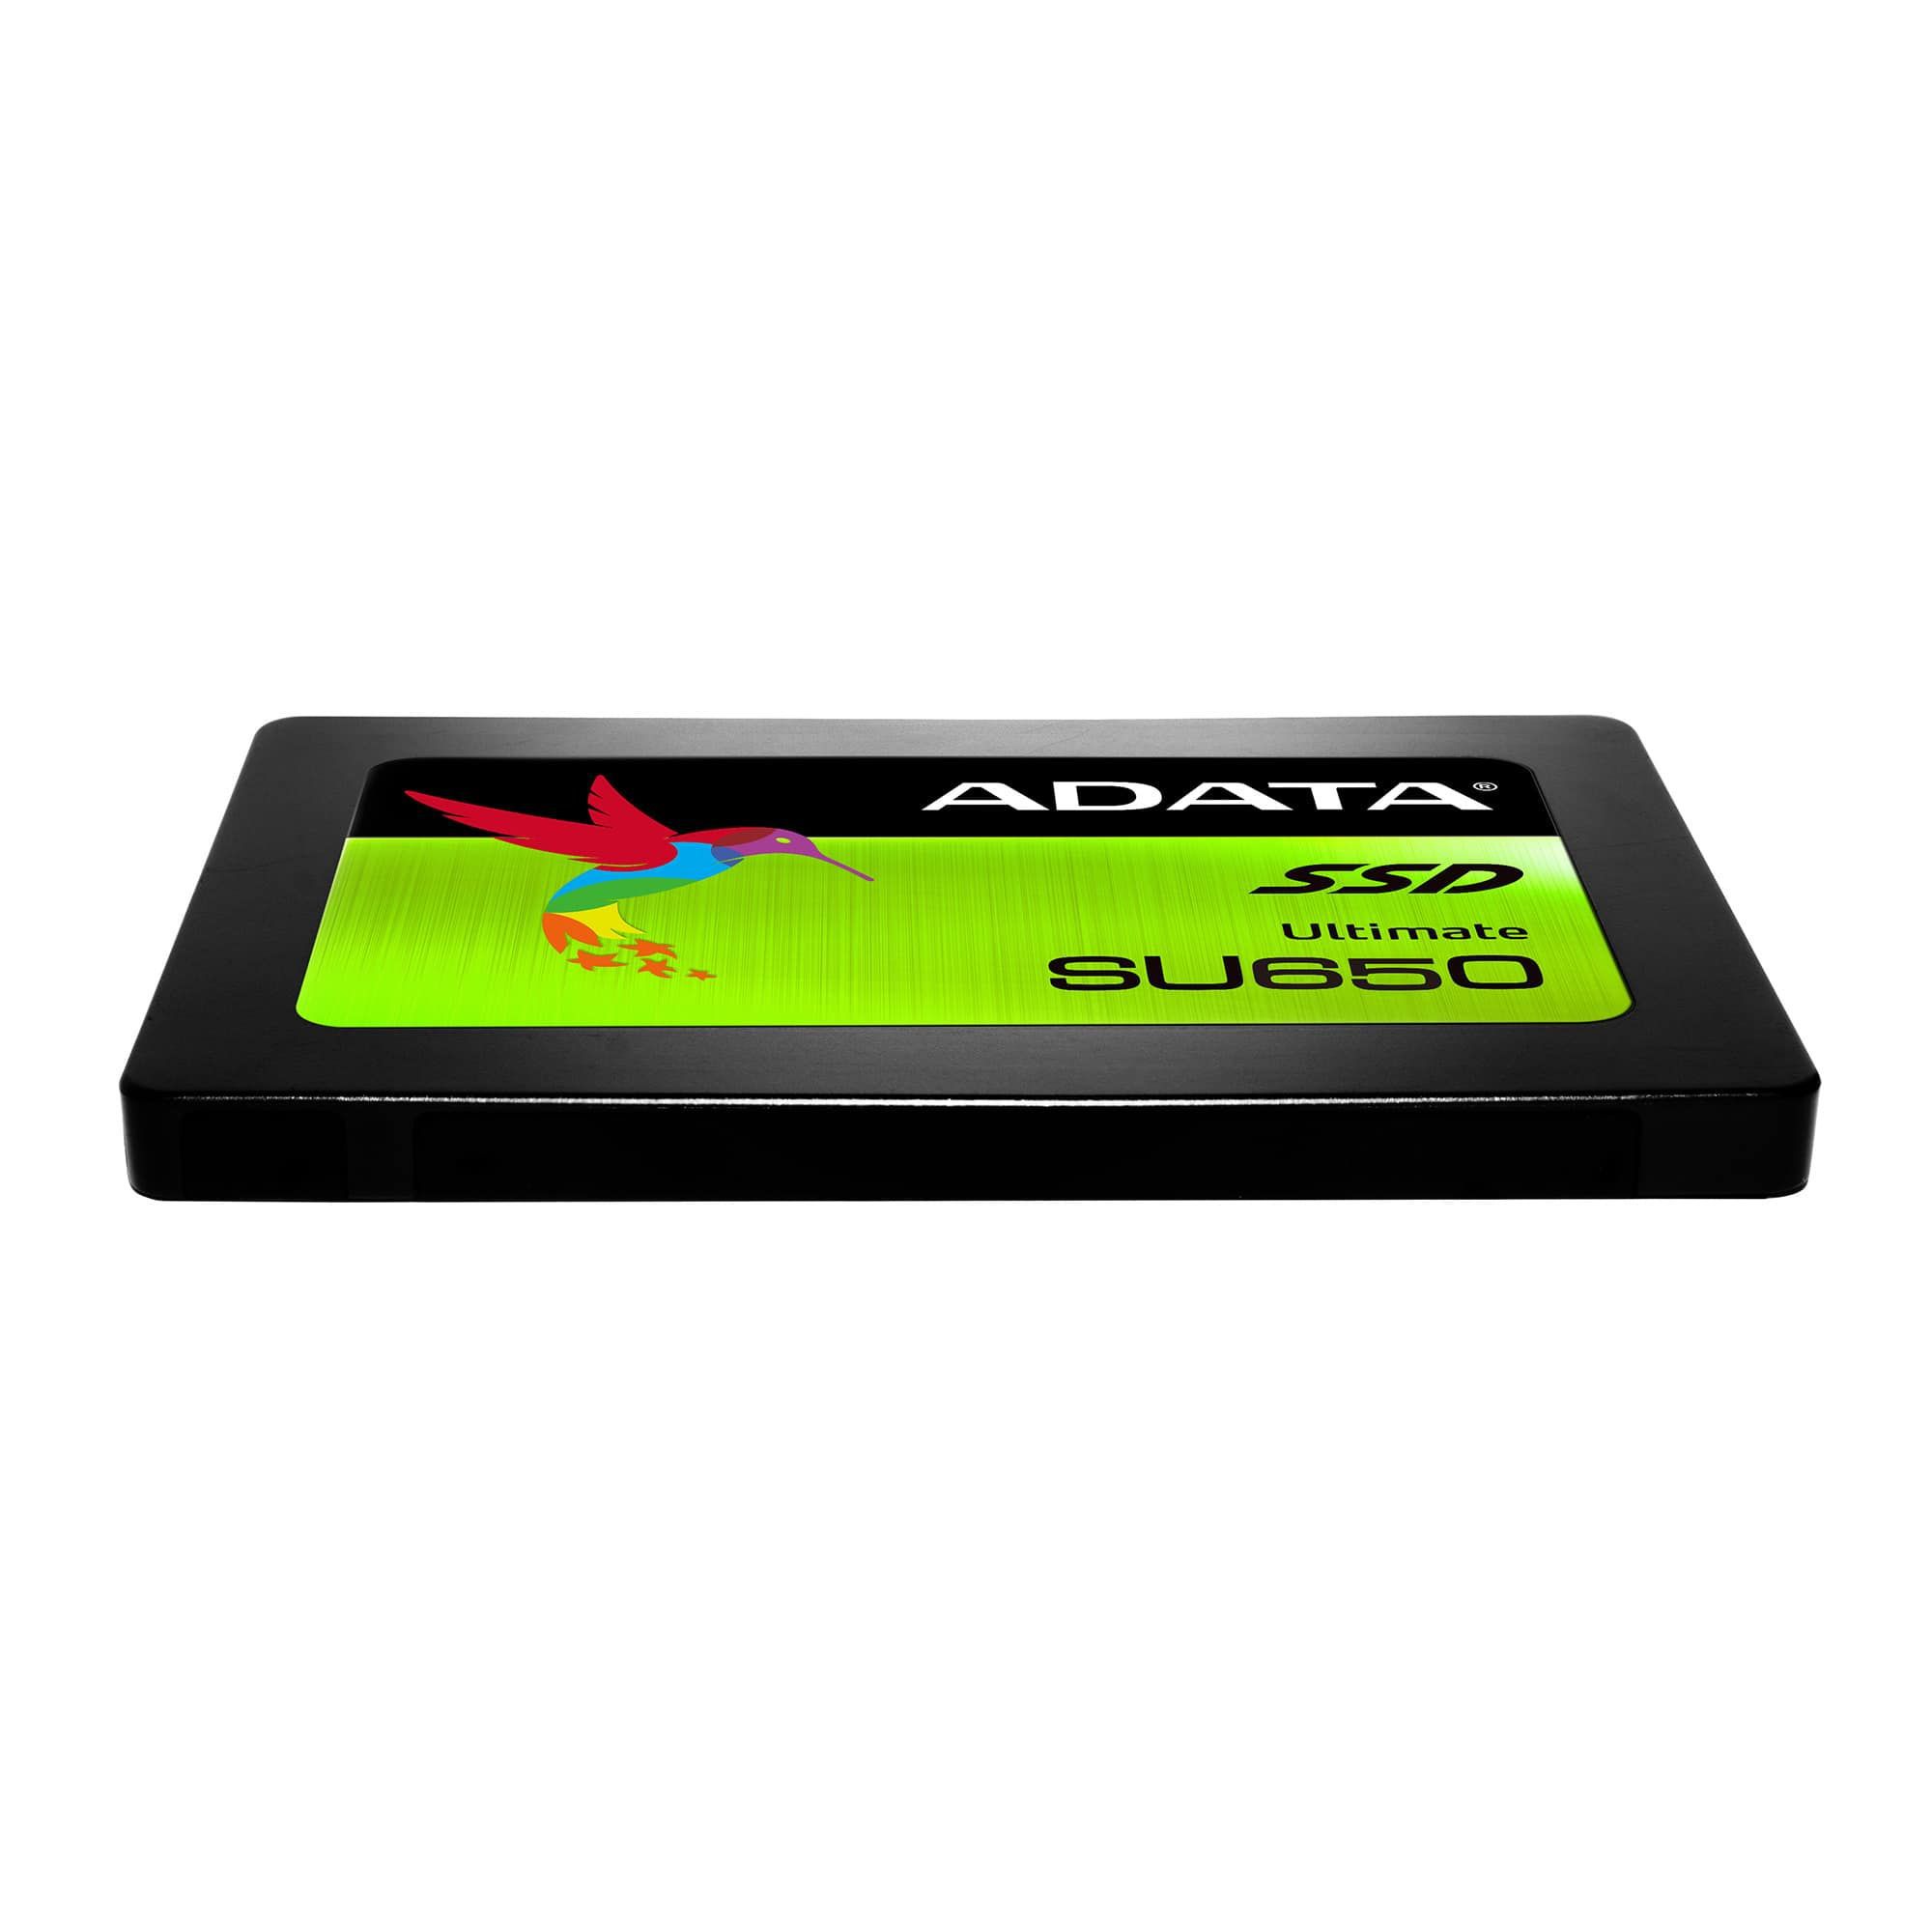 SSD ADATA SU650, 120GB, 2.5